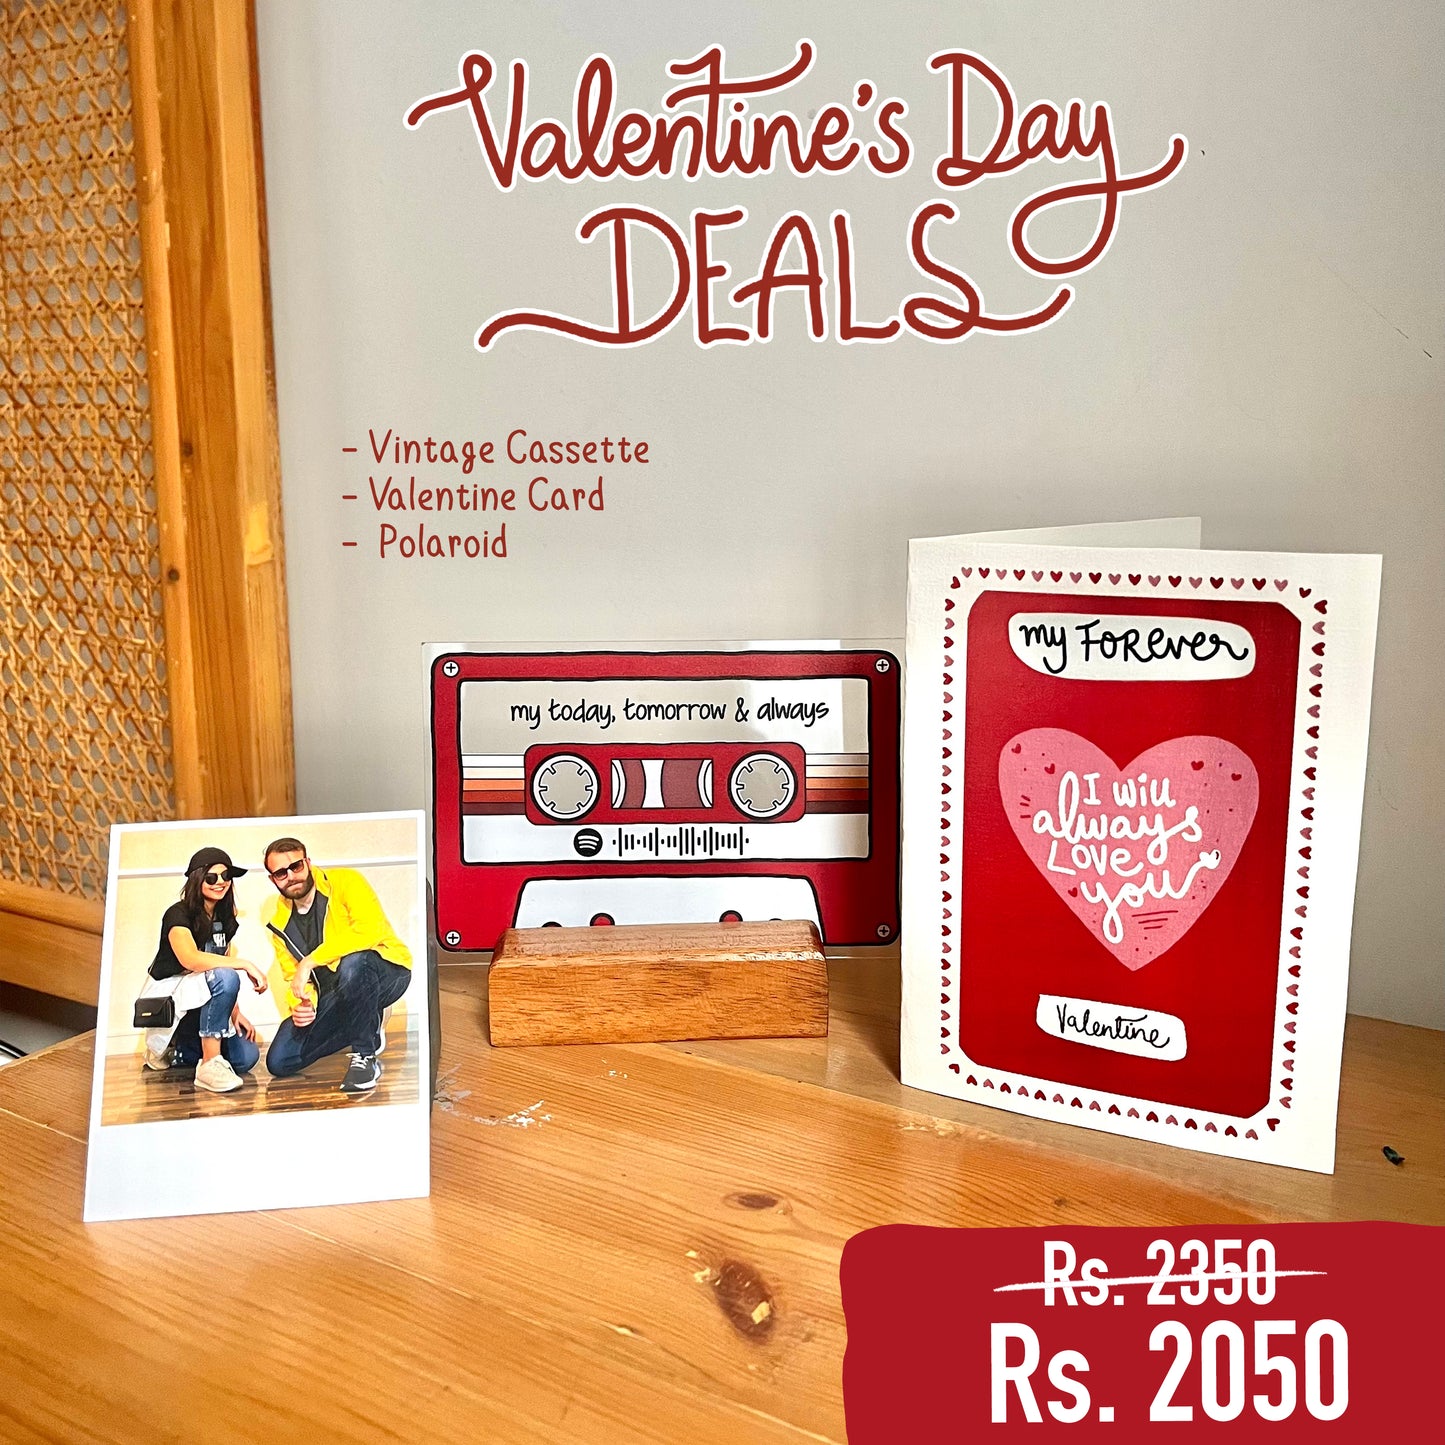 Deal 2 (Cassette, Valentine Card, Polaroid)